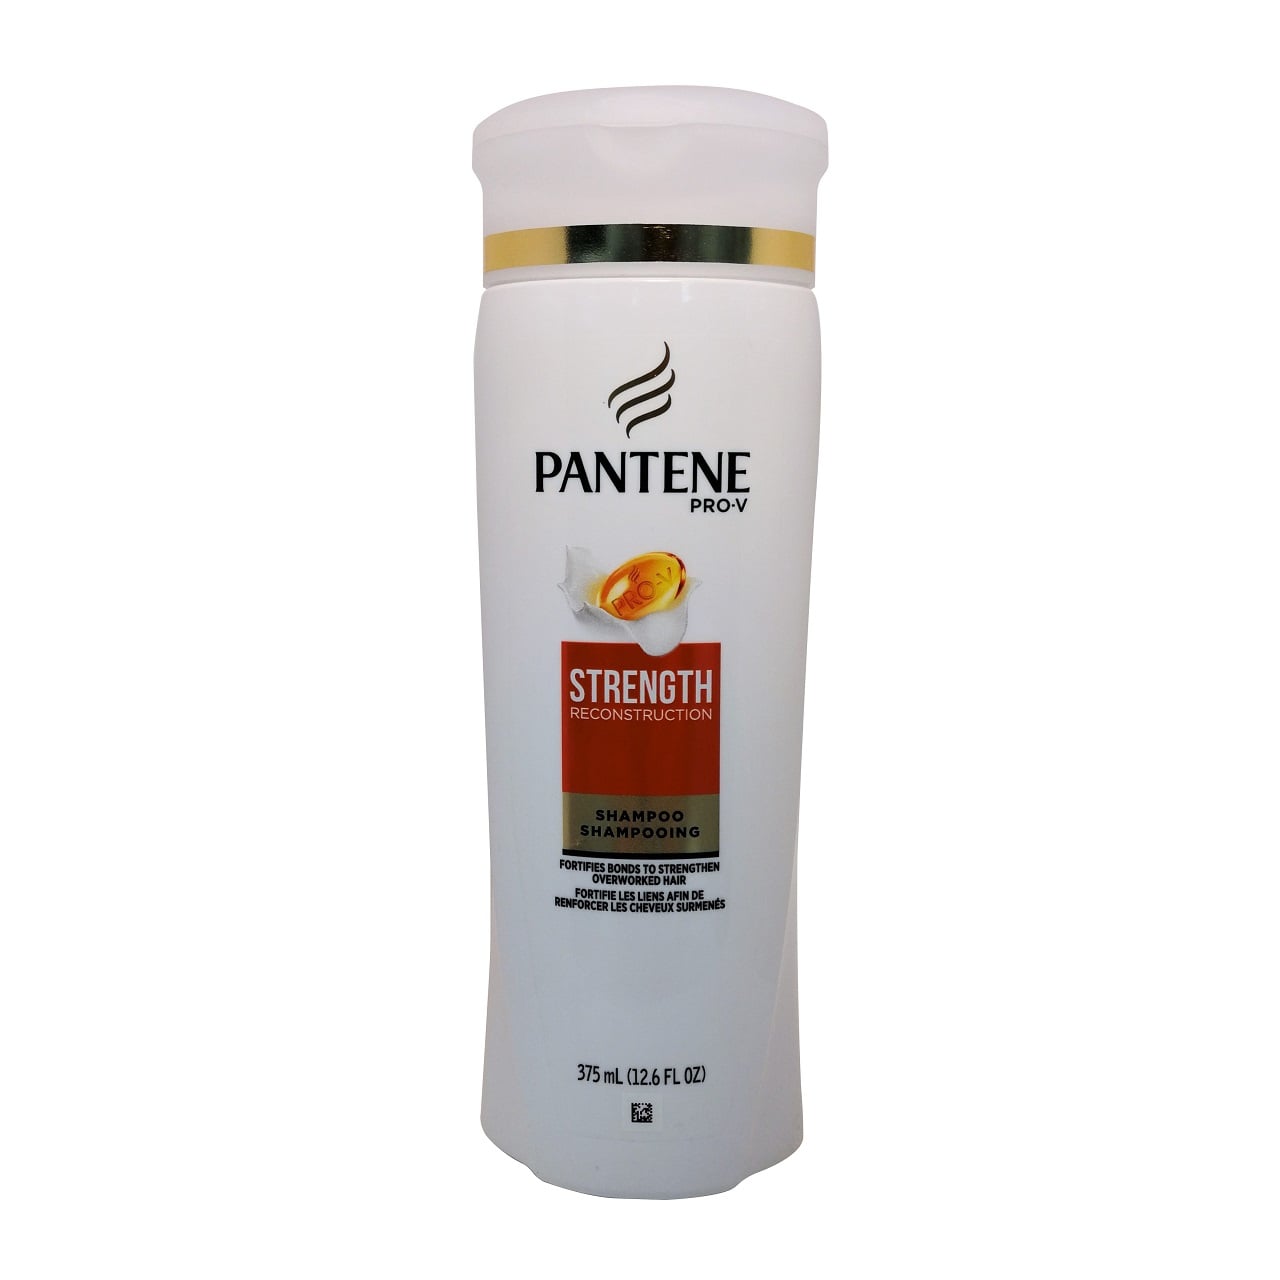 Product label for Pantene Pro-V Strength Reconstruction Shampoo (375mL)